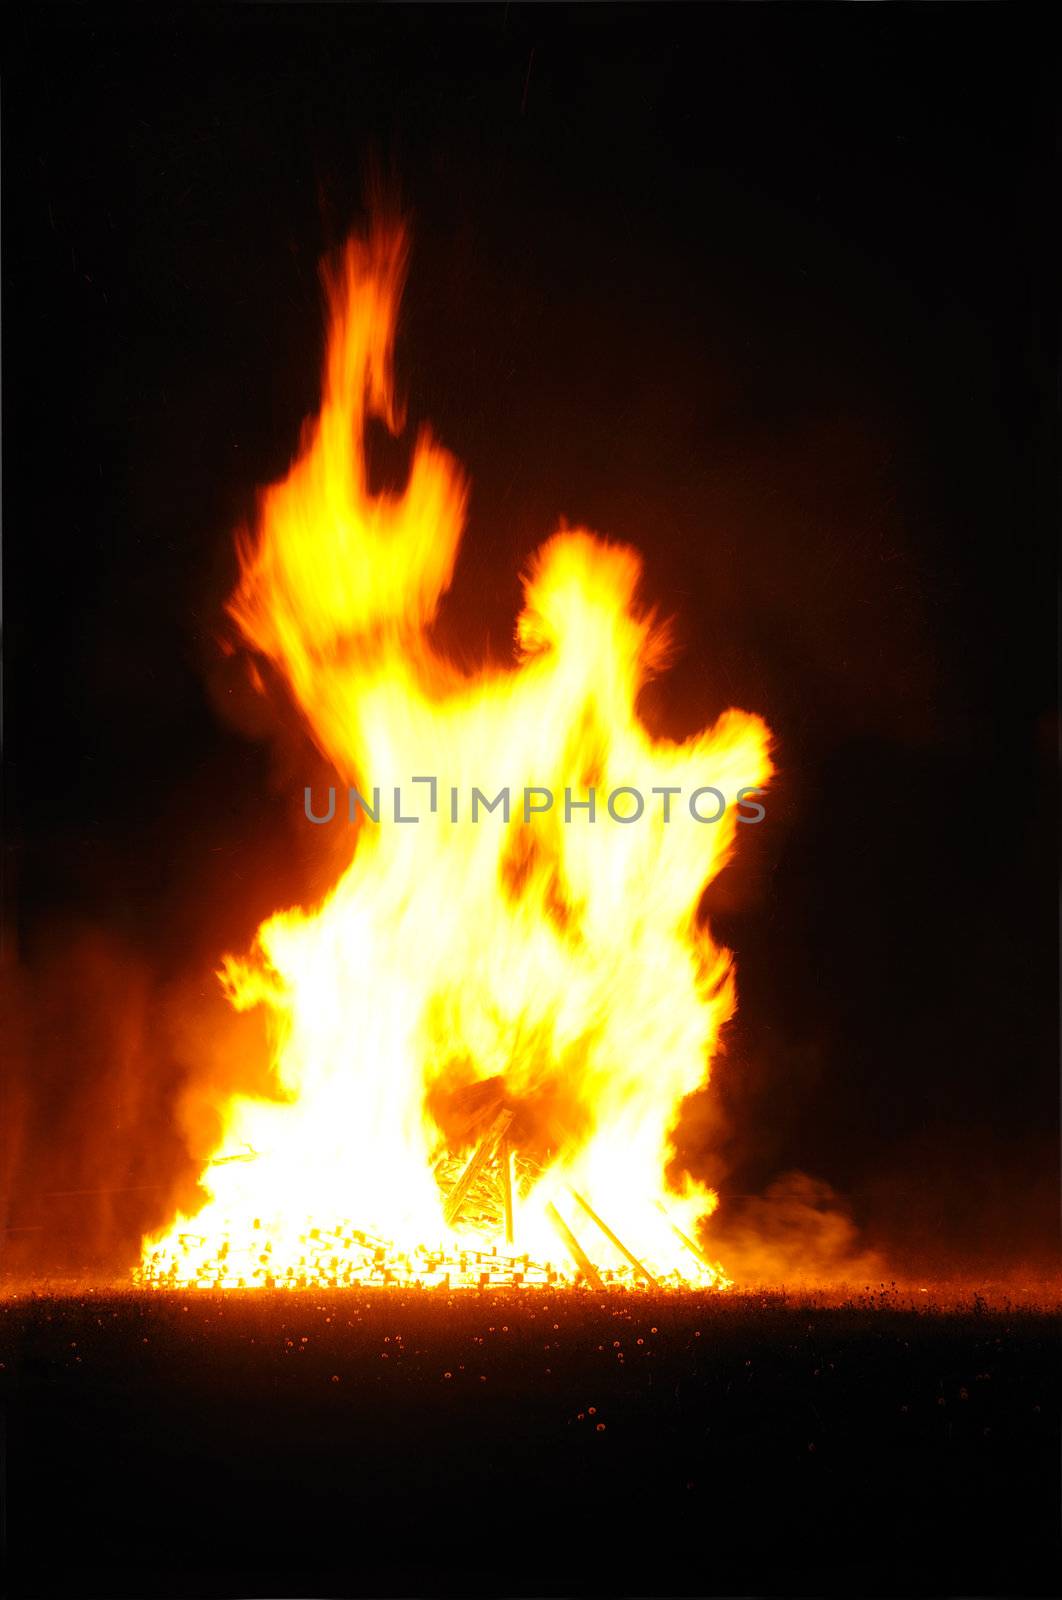 A bonfire burning against a dark background